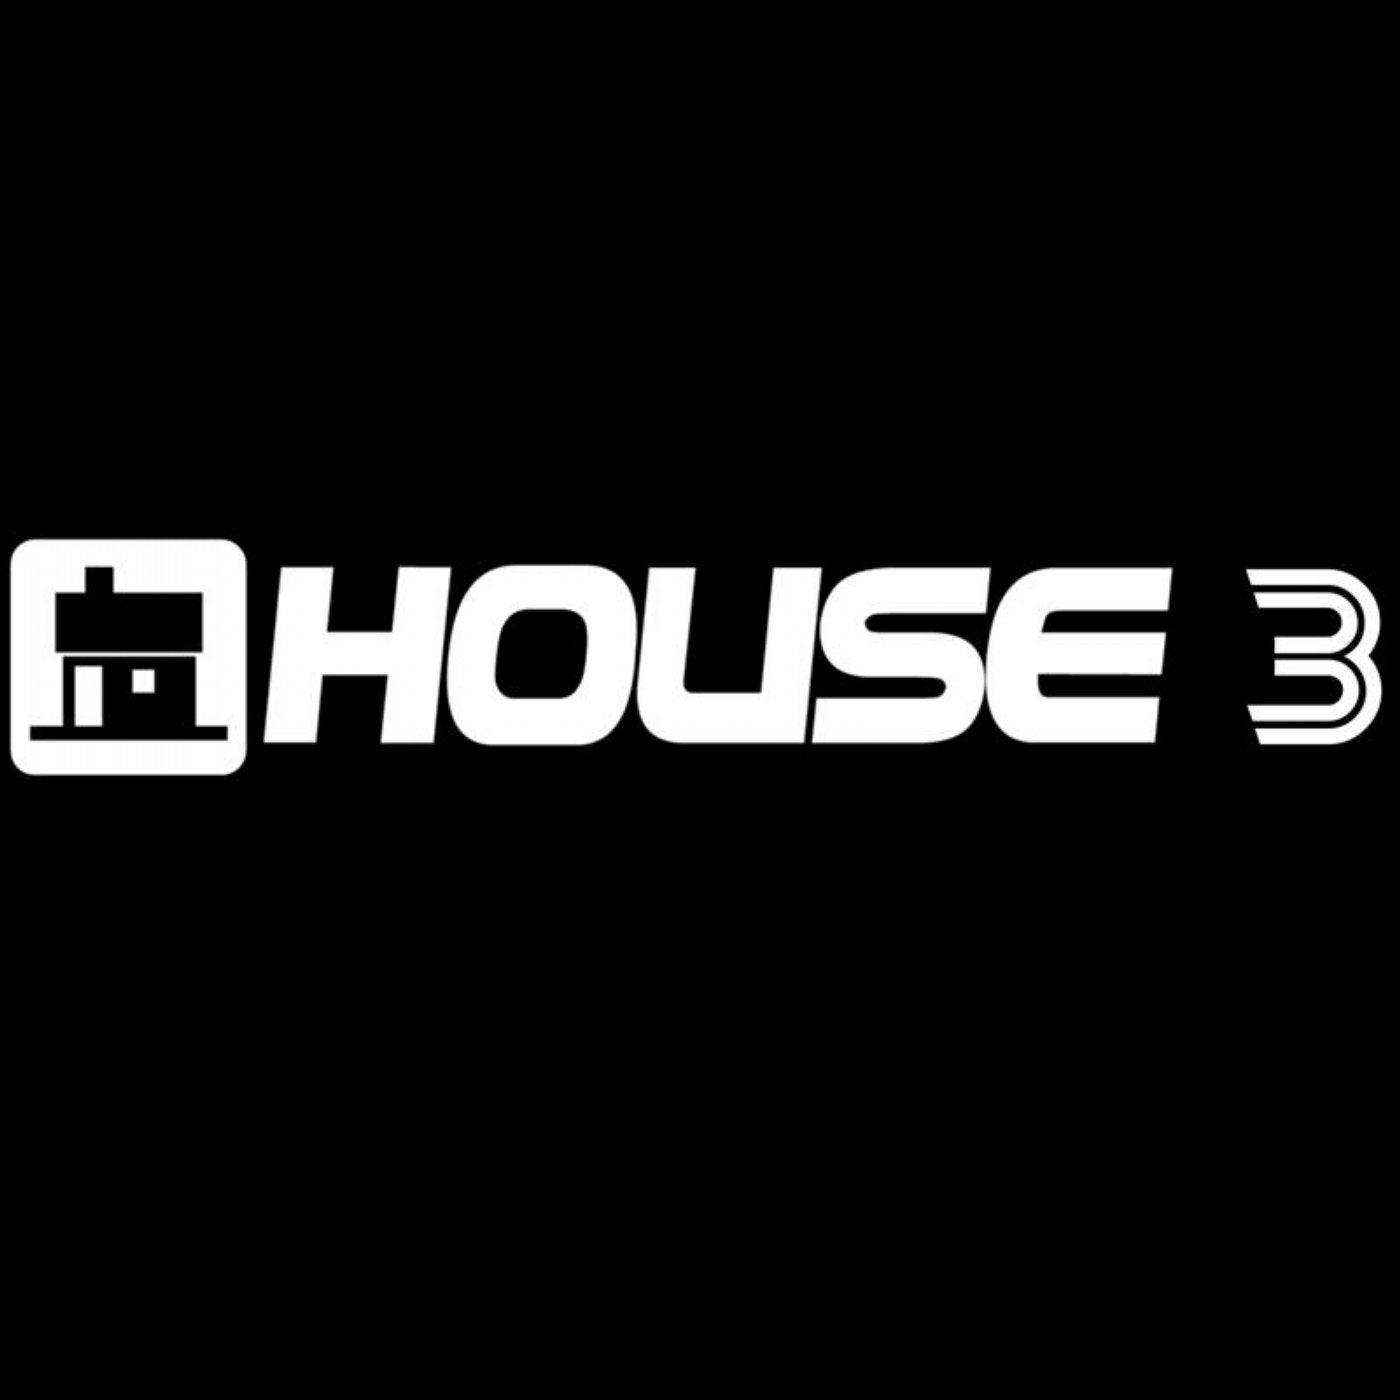 House 3